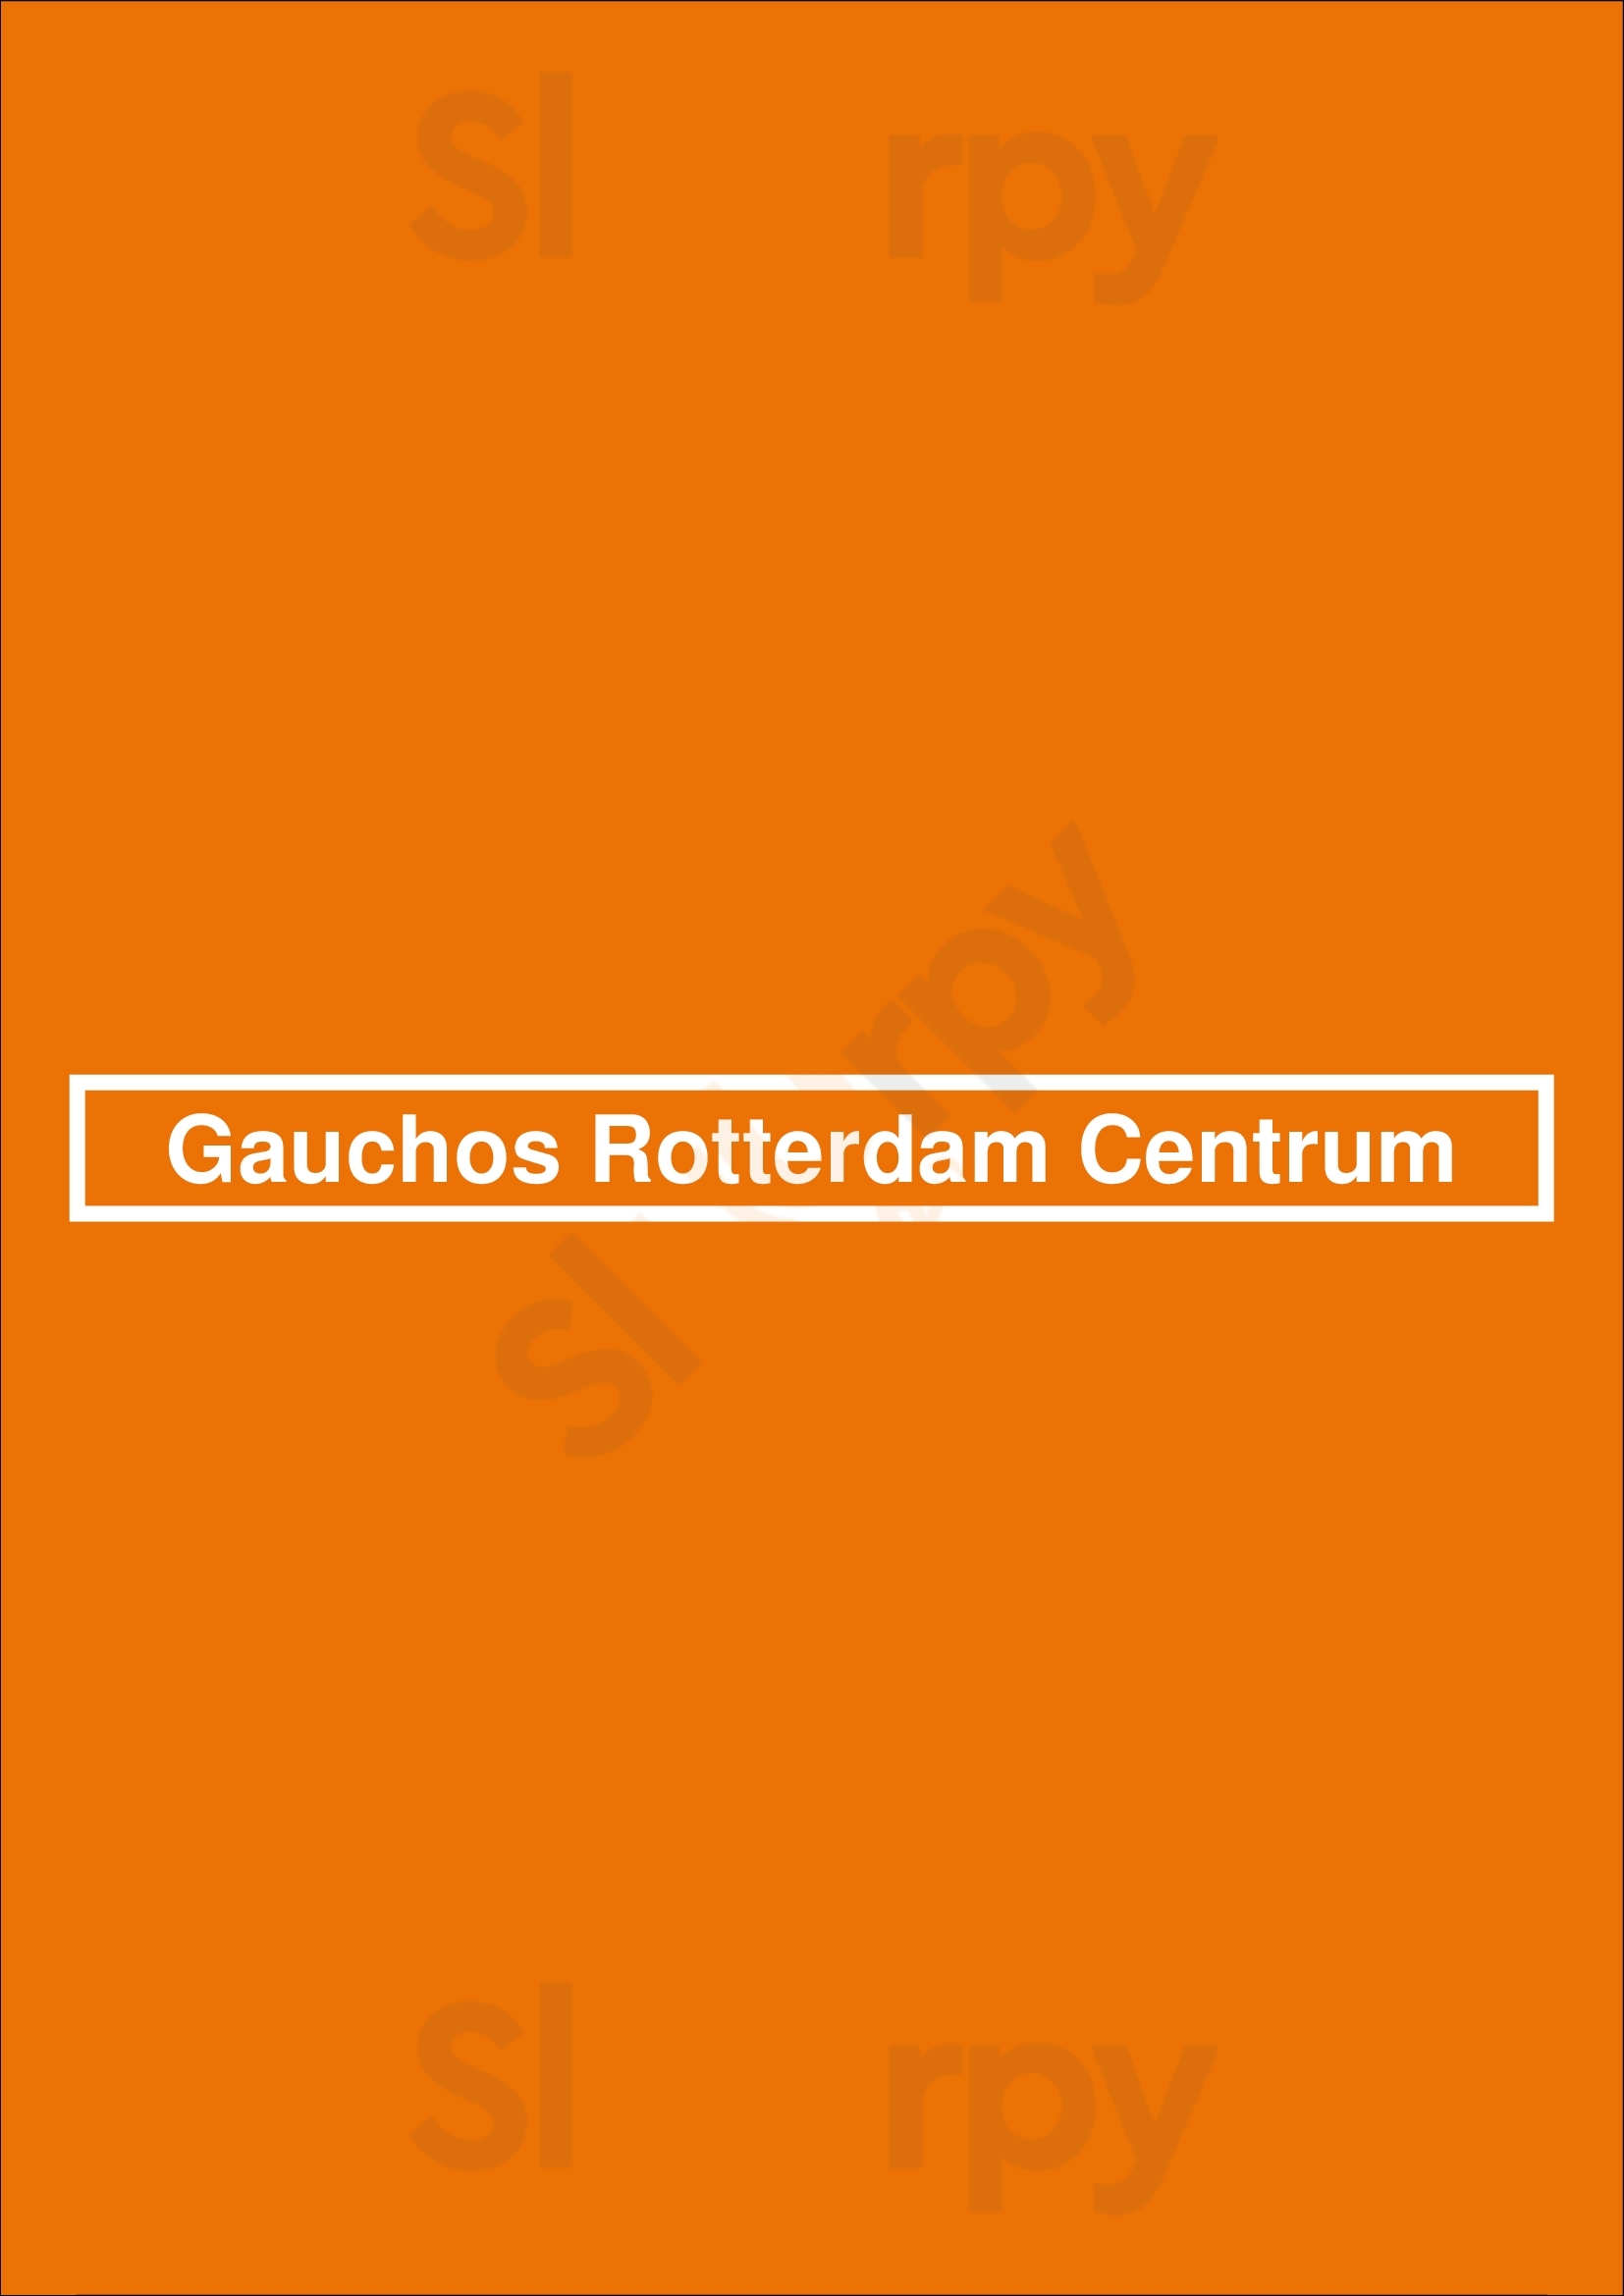 Gauchos Rotterdam Centrum Rotterdam Menu - 1